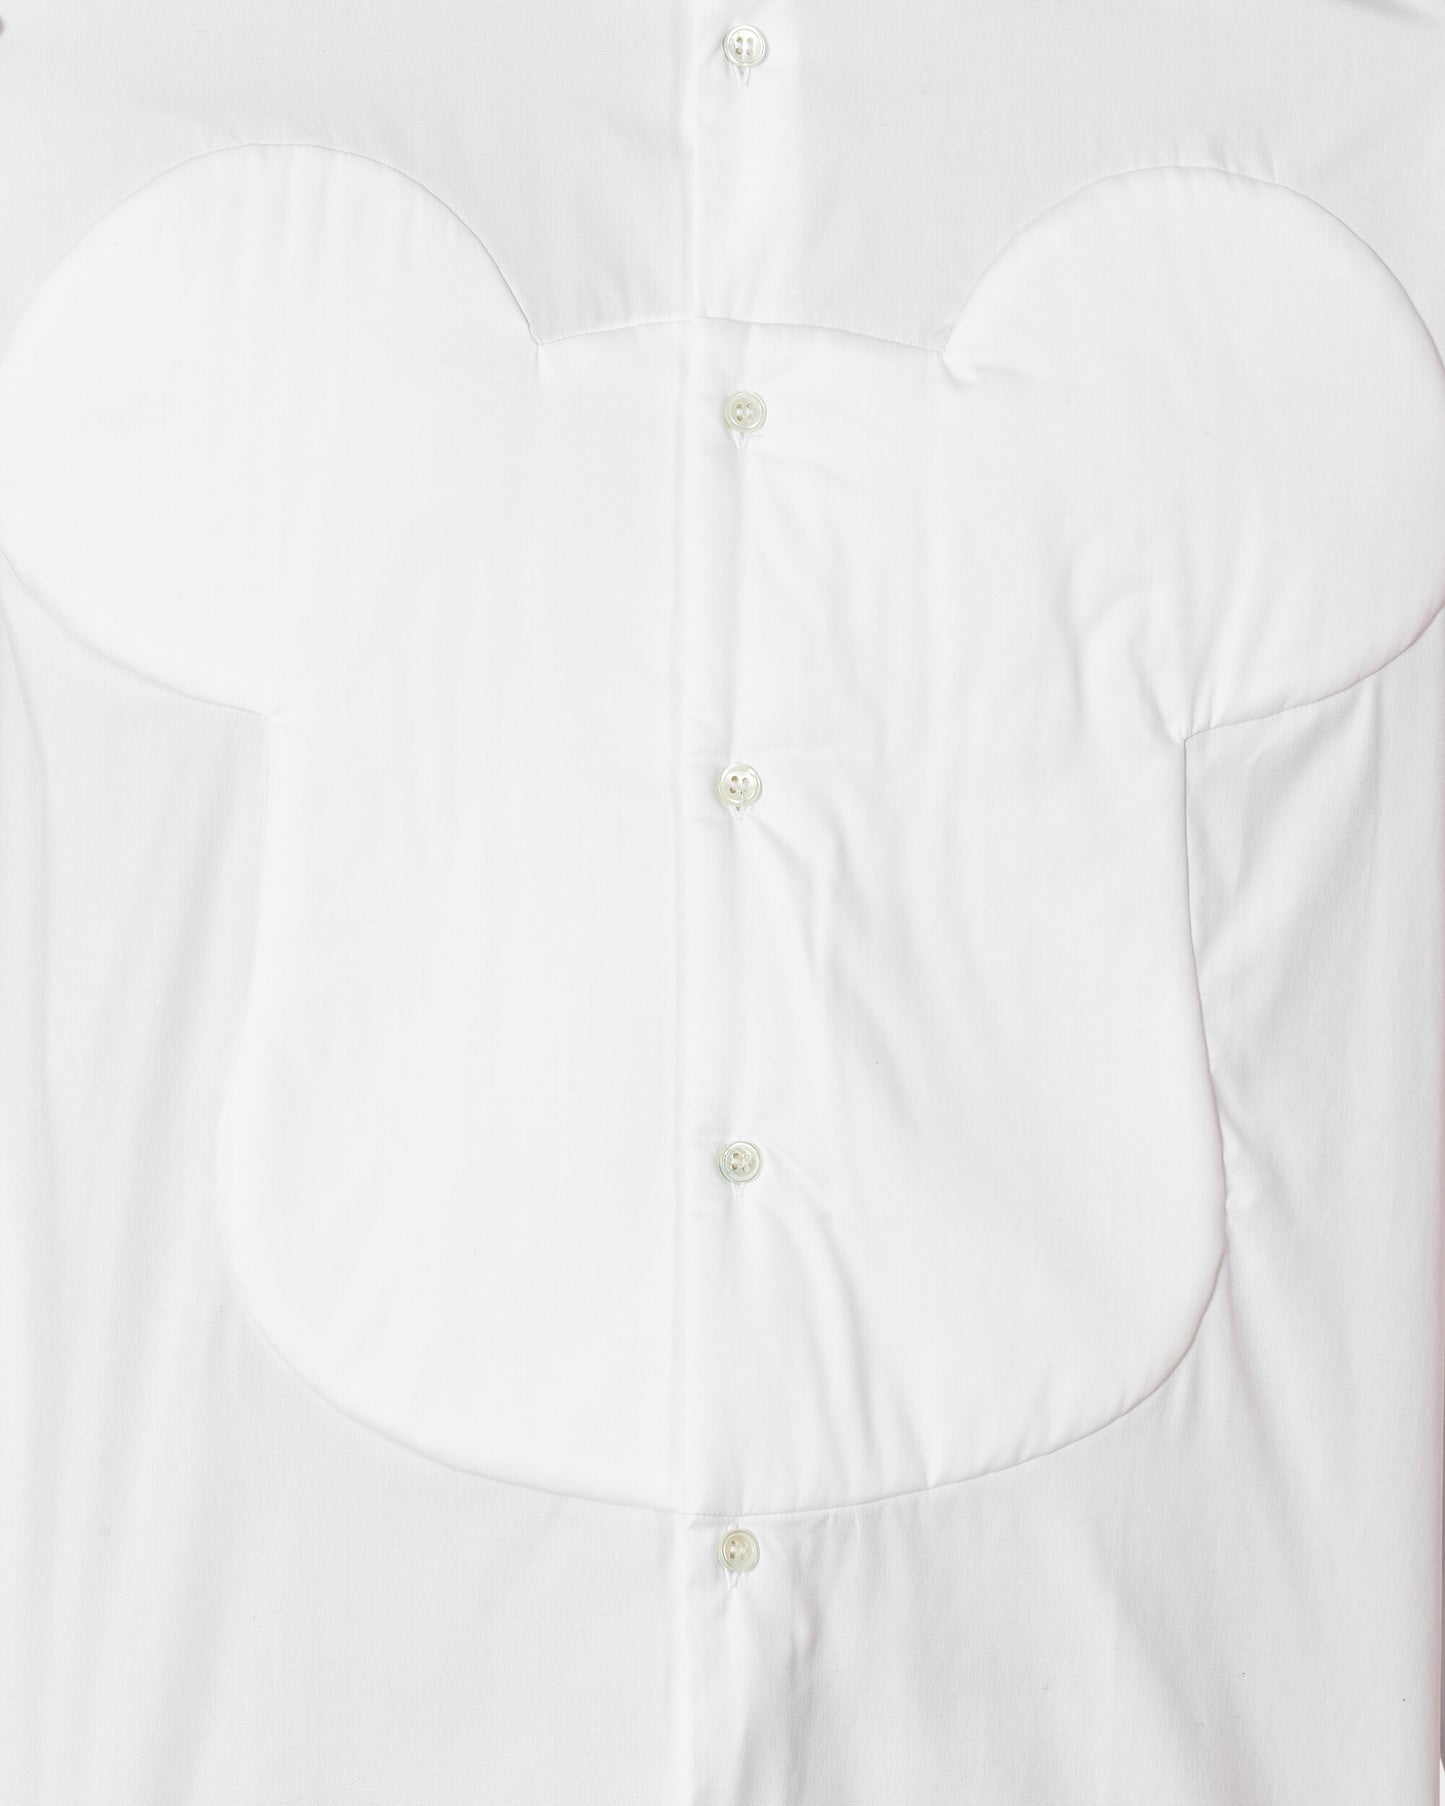 Comme Des Garçons Shirt Shirt White/White Shirts Longsleeve Shirt FK-B029-S23 1